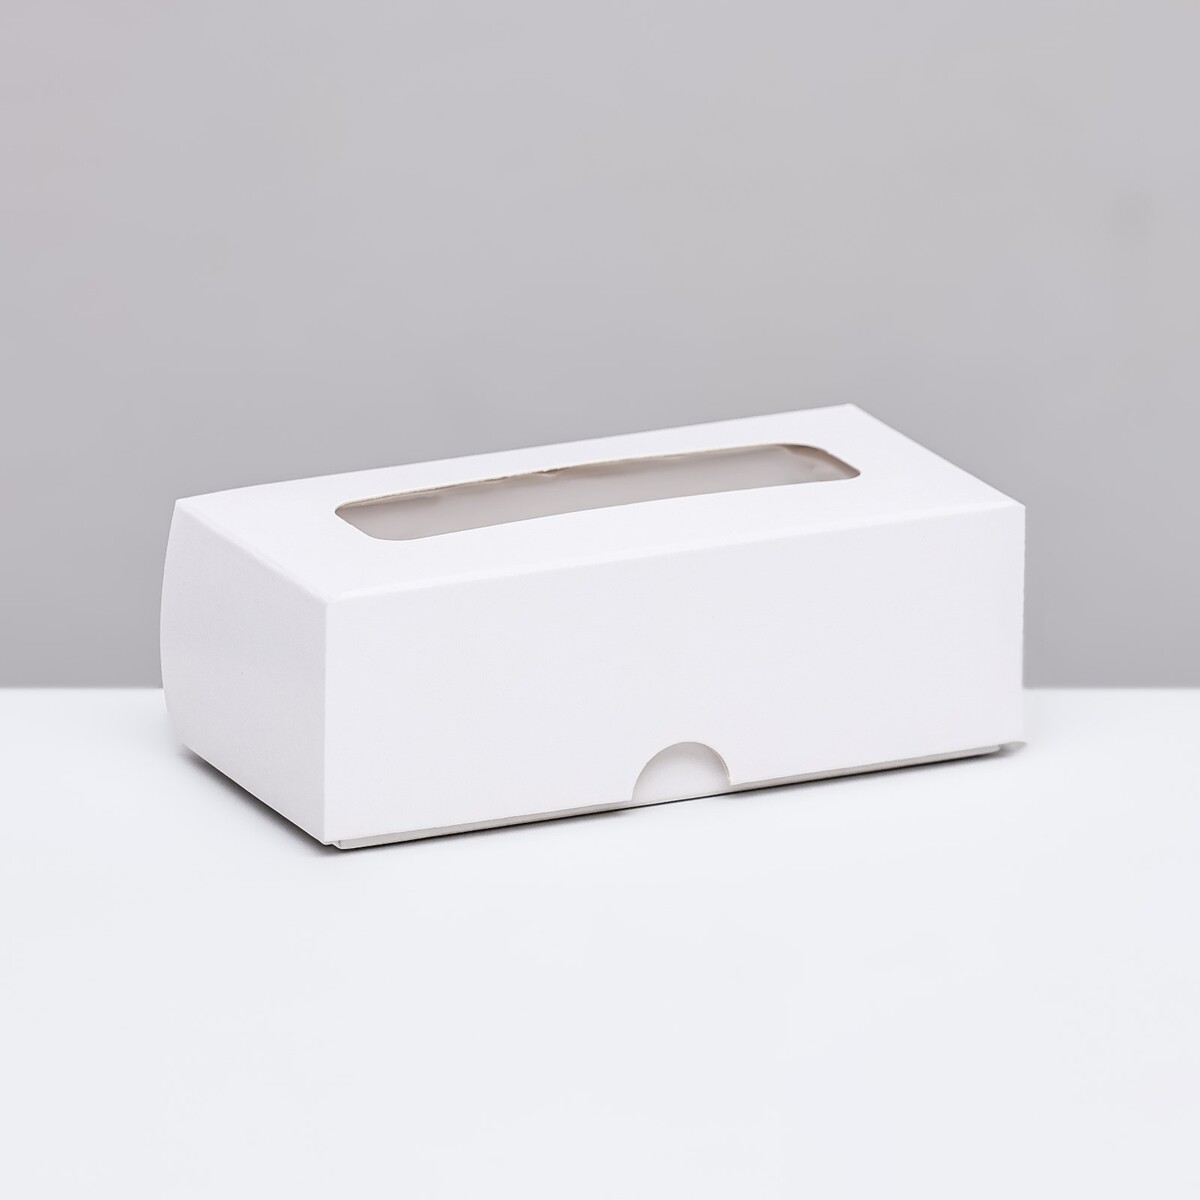 Коробка складная под 2 конфеты, белая, 5 х 10,5 х 3,5 см коробка складная под 3 конфеты белая 5 х 13 7 х 3 5 см